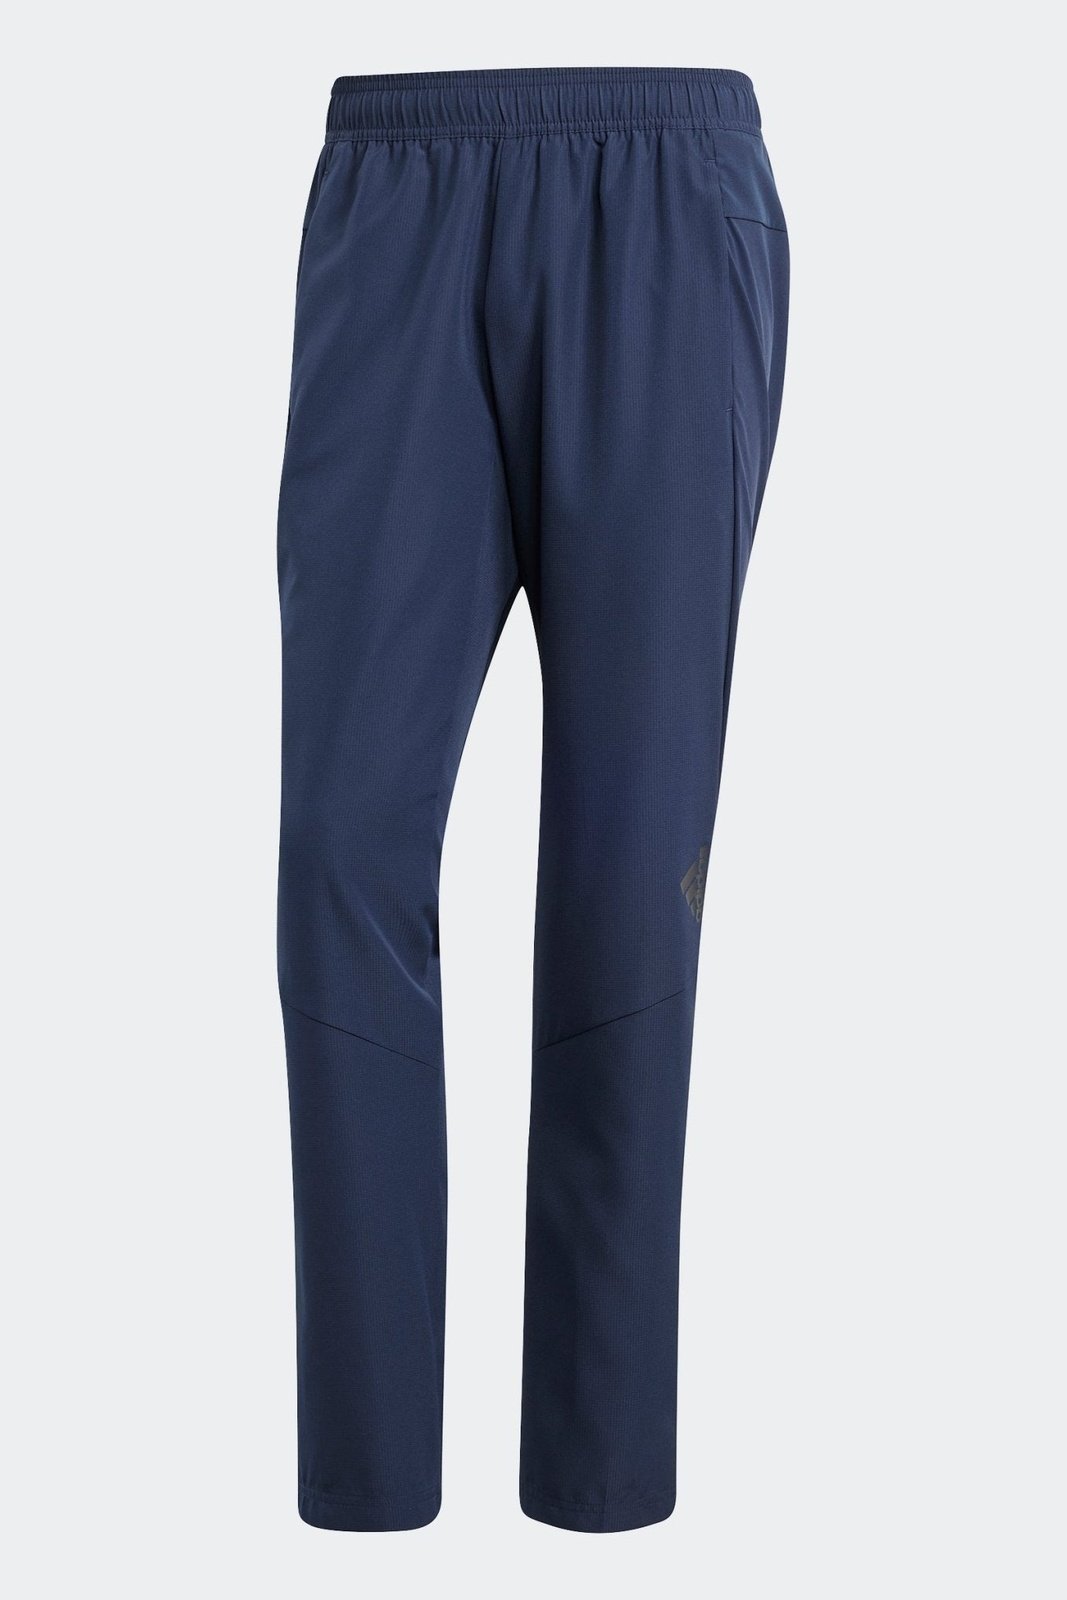 ADIDAS - מכנסיים ארוכים לגברים DESIGNED FOR MOVEMENT בצבע כחול - MASHBIR//365